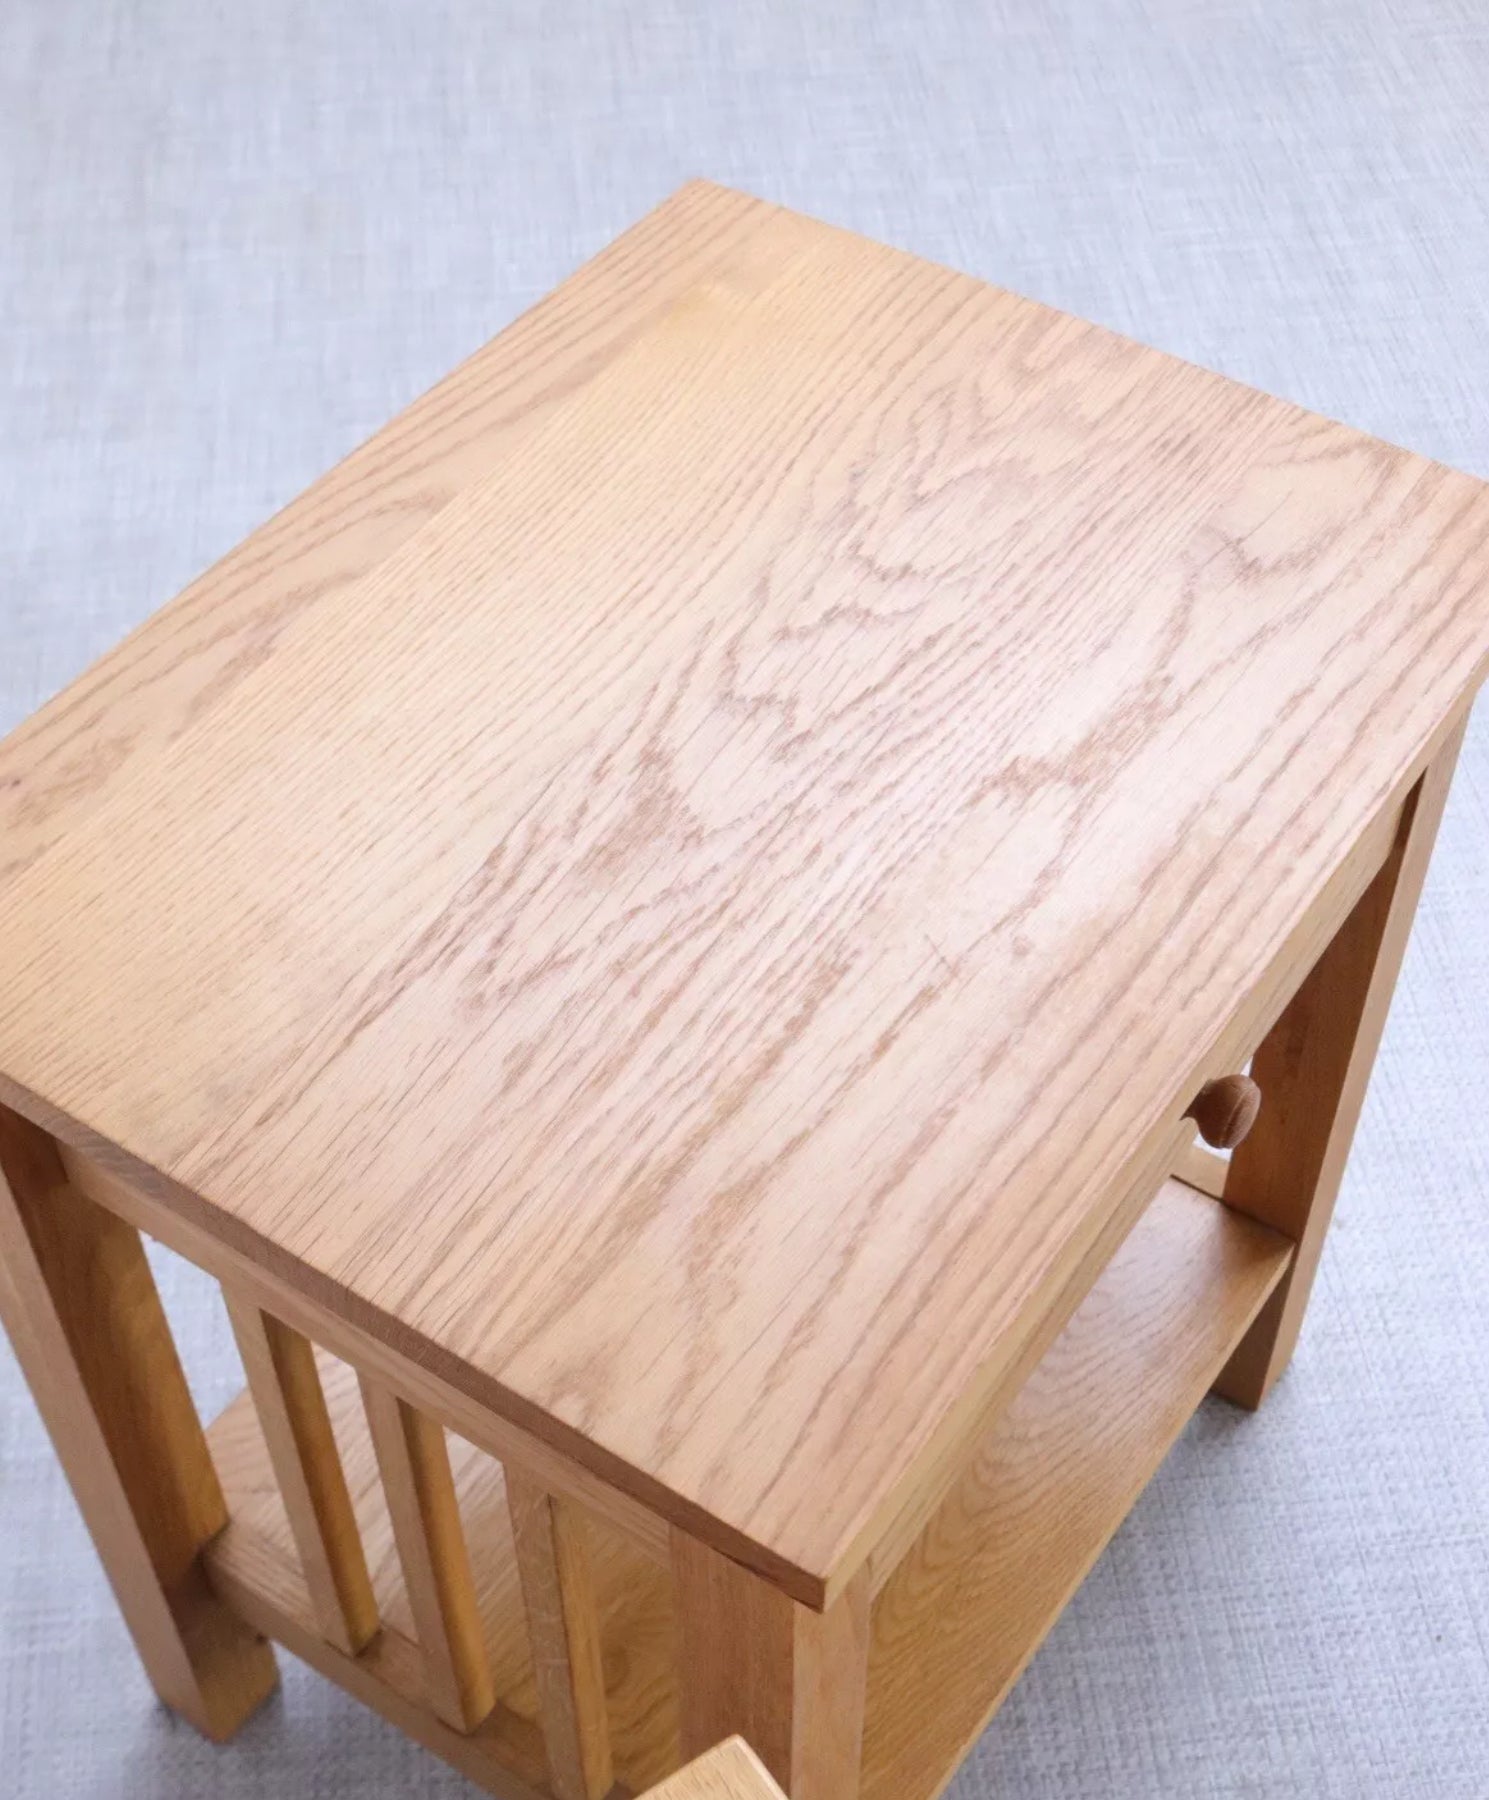 Pair of Modern Solid Oak Bedside Tables Cabinets Nightstands Great Conditions - teakyfinders